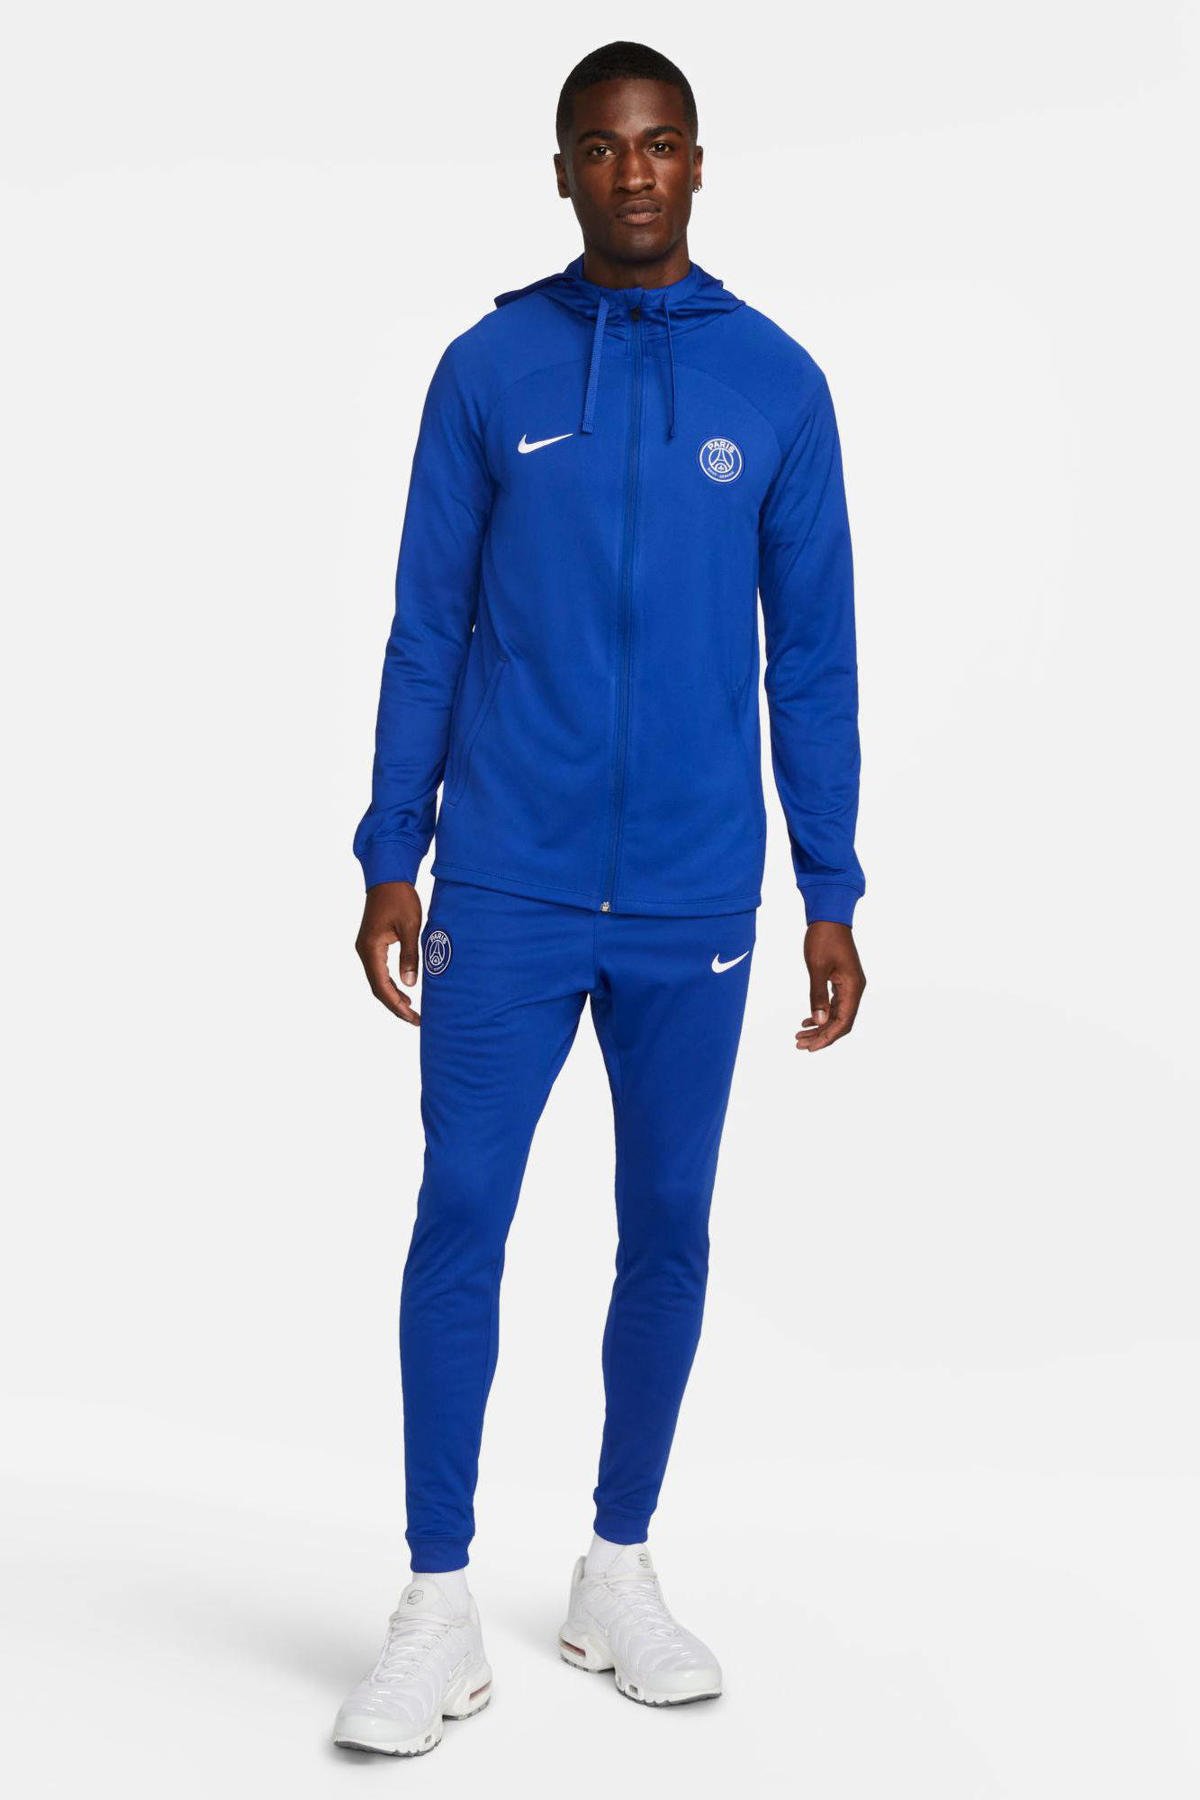 Keel Inspecteren Literatuur Nike Paris Saint Germain trainingspak blauw | wehkamp